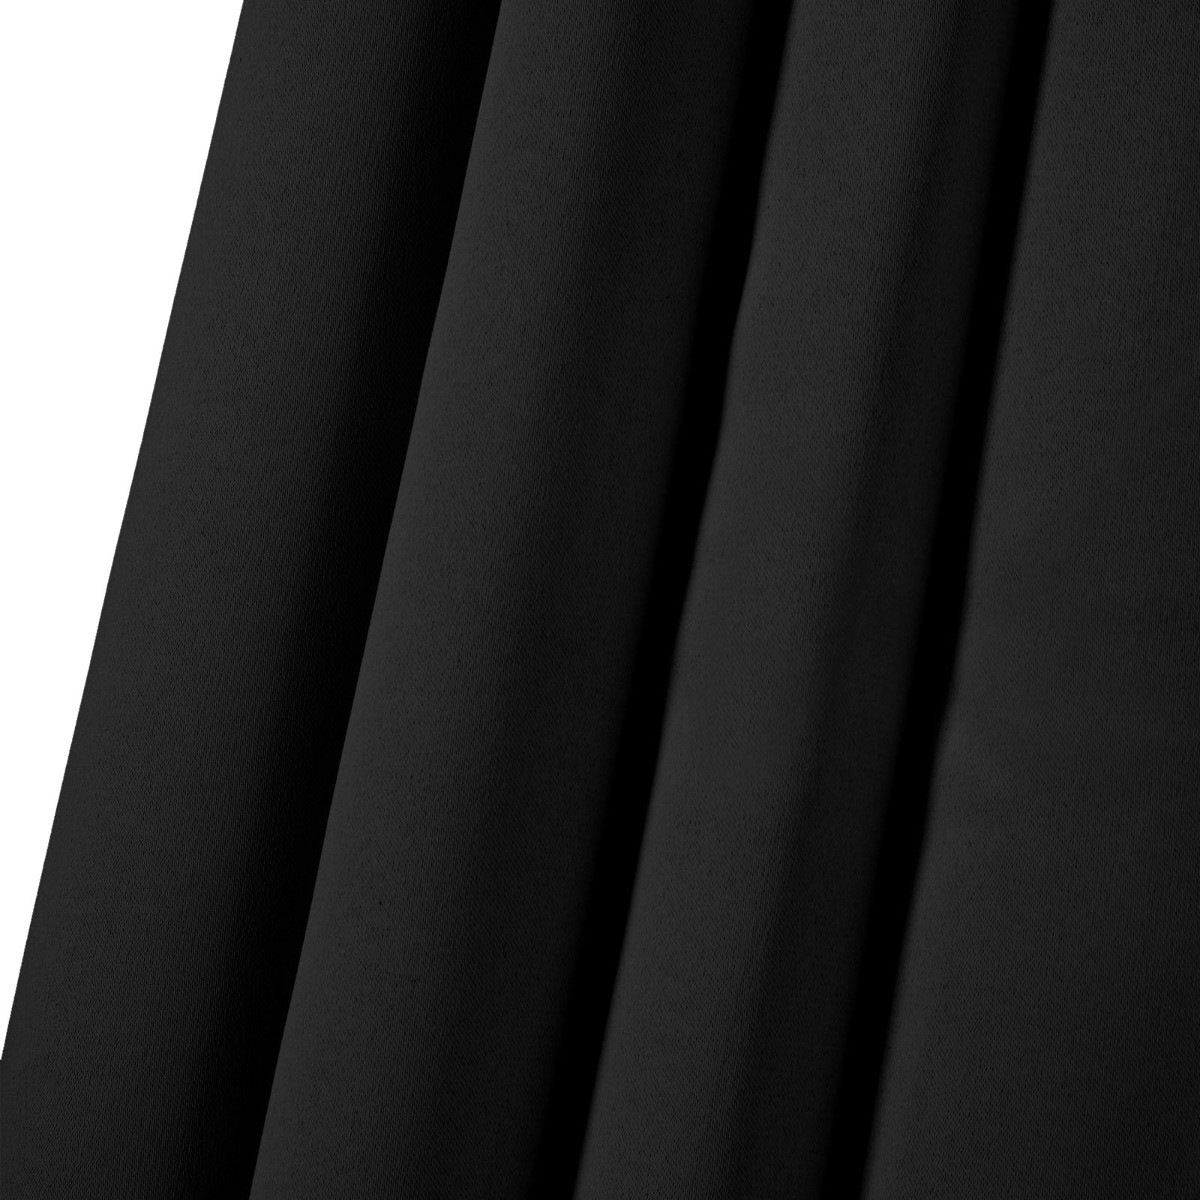 Dreamscene Eyelet Blackout Curtains - Black, 66" X 54">